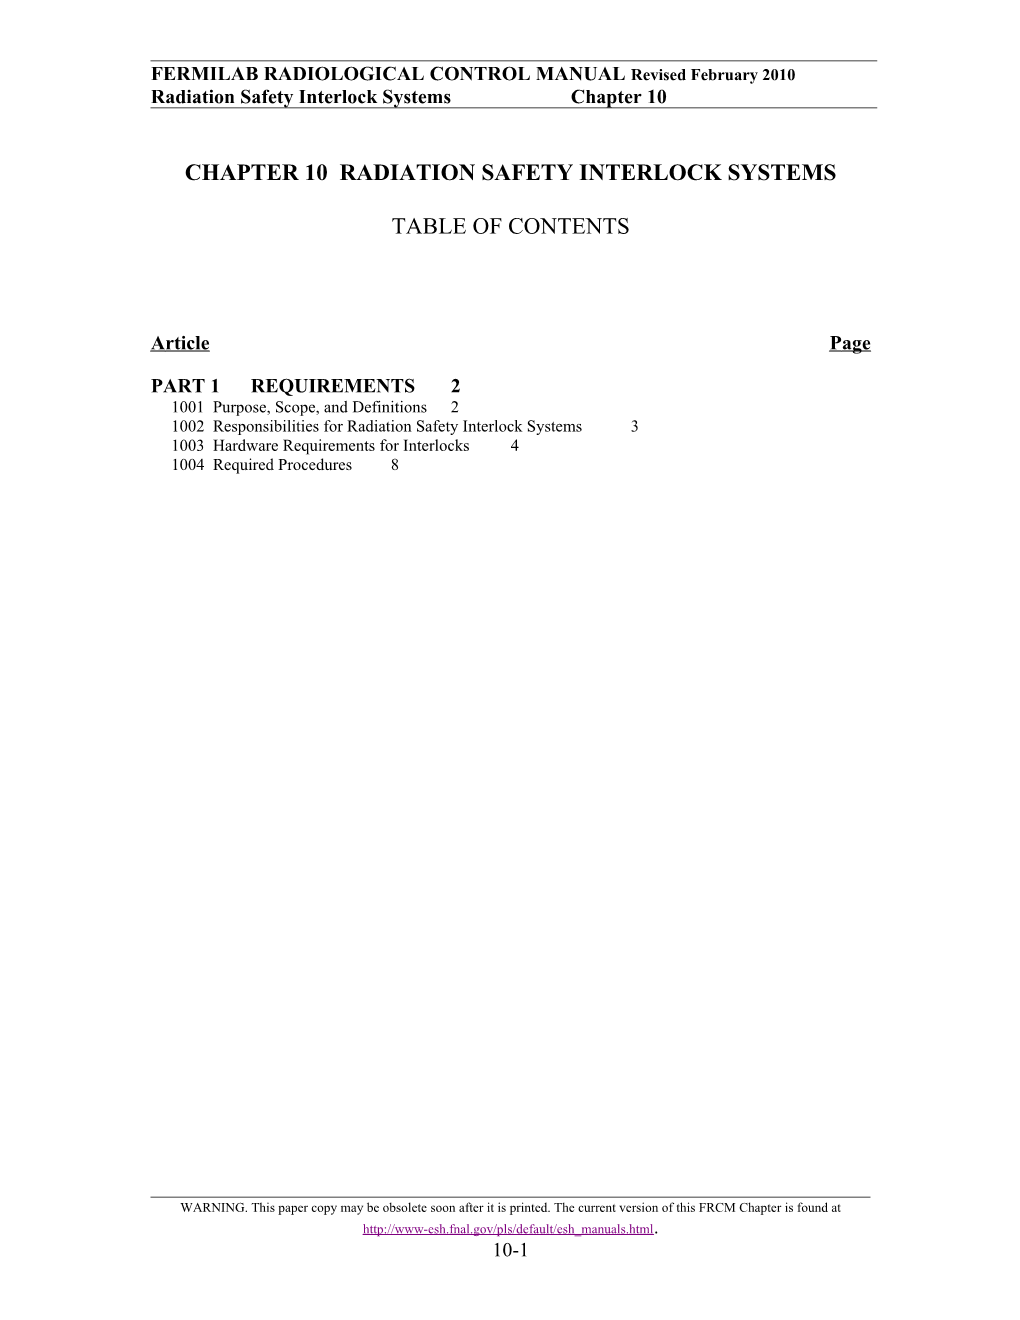 Chapter 10 Radiation Safety Interlock Systems